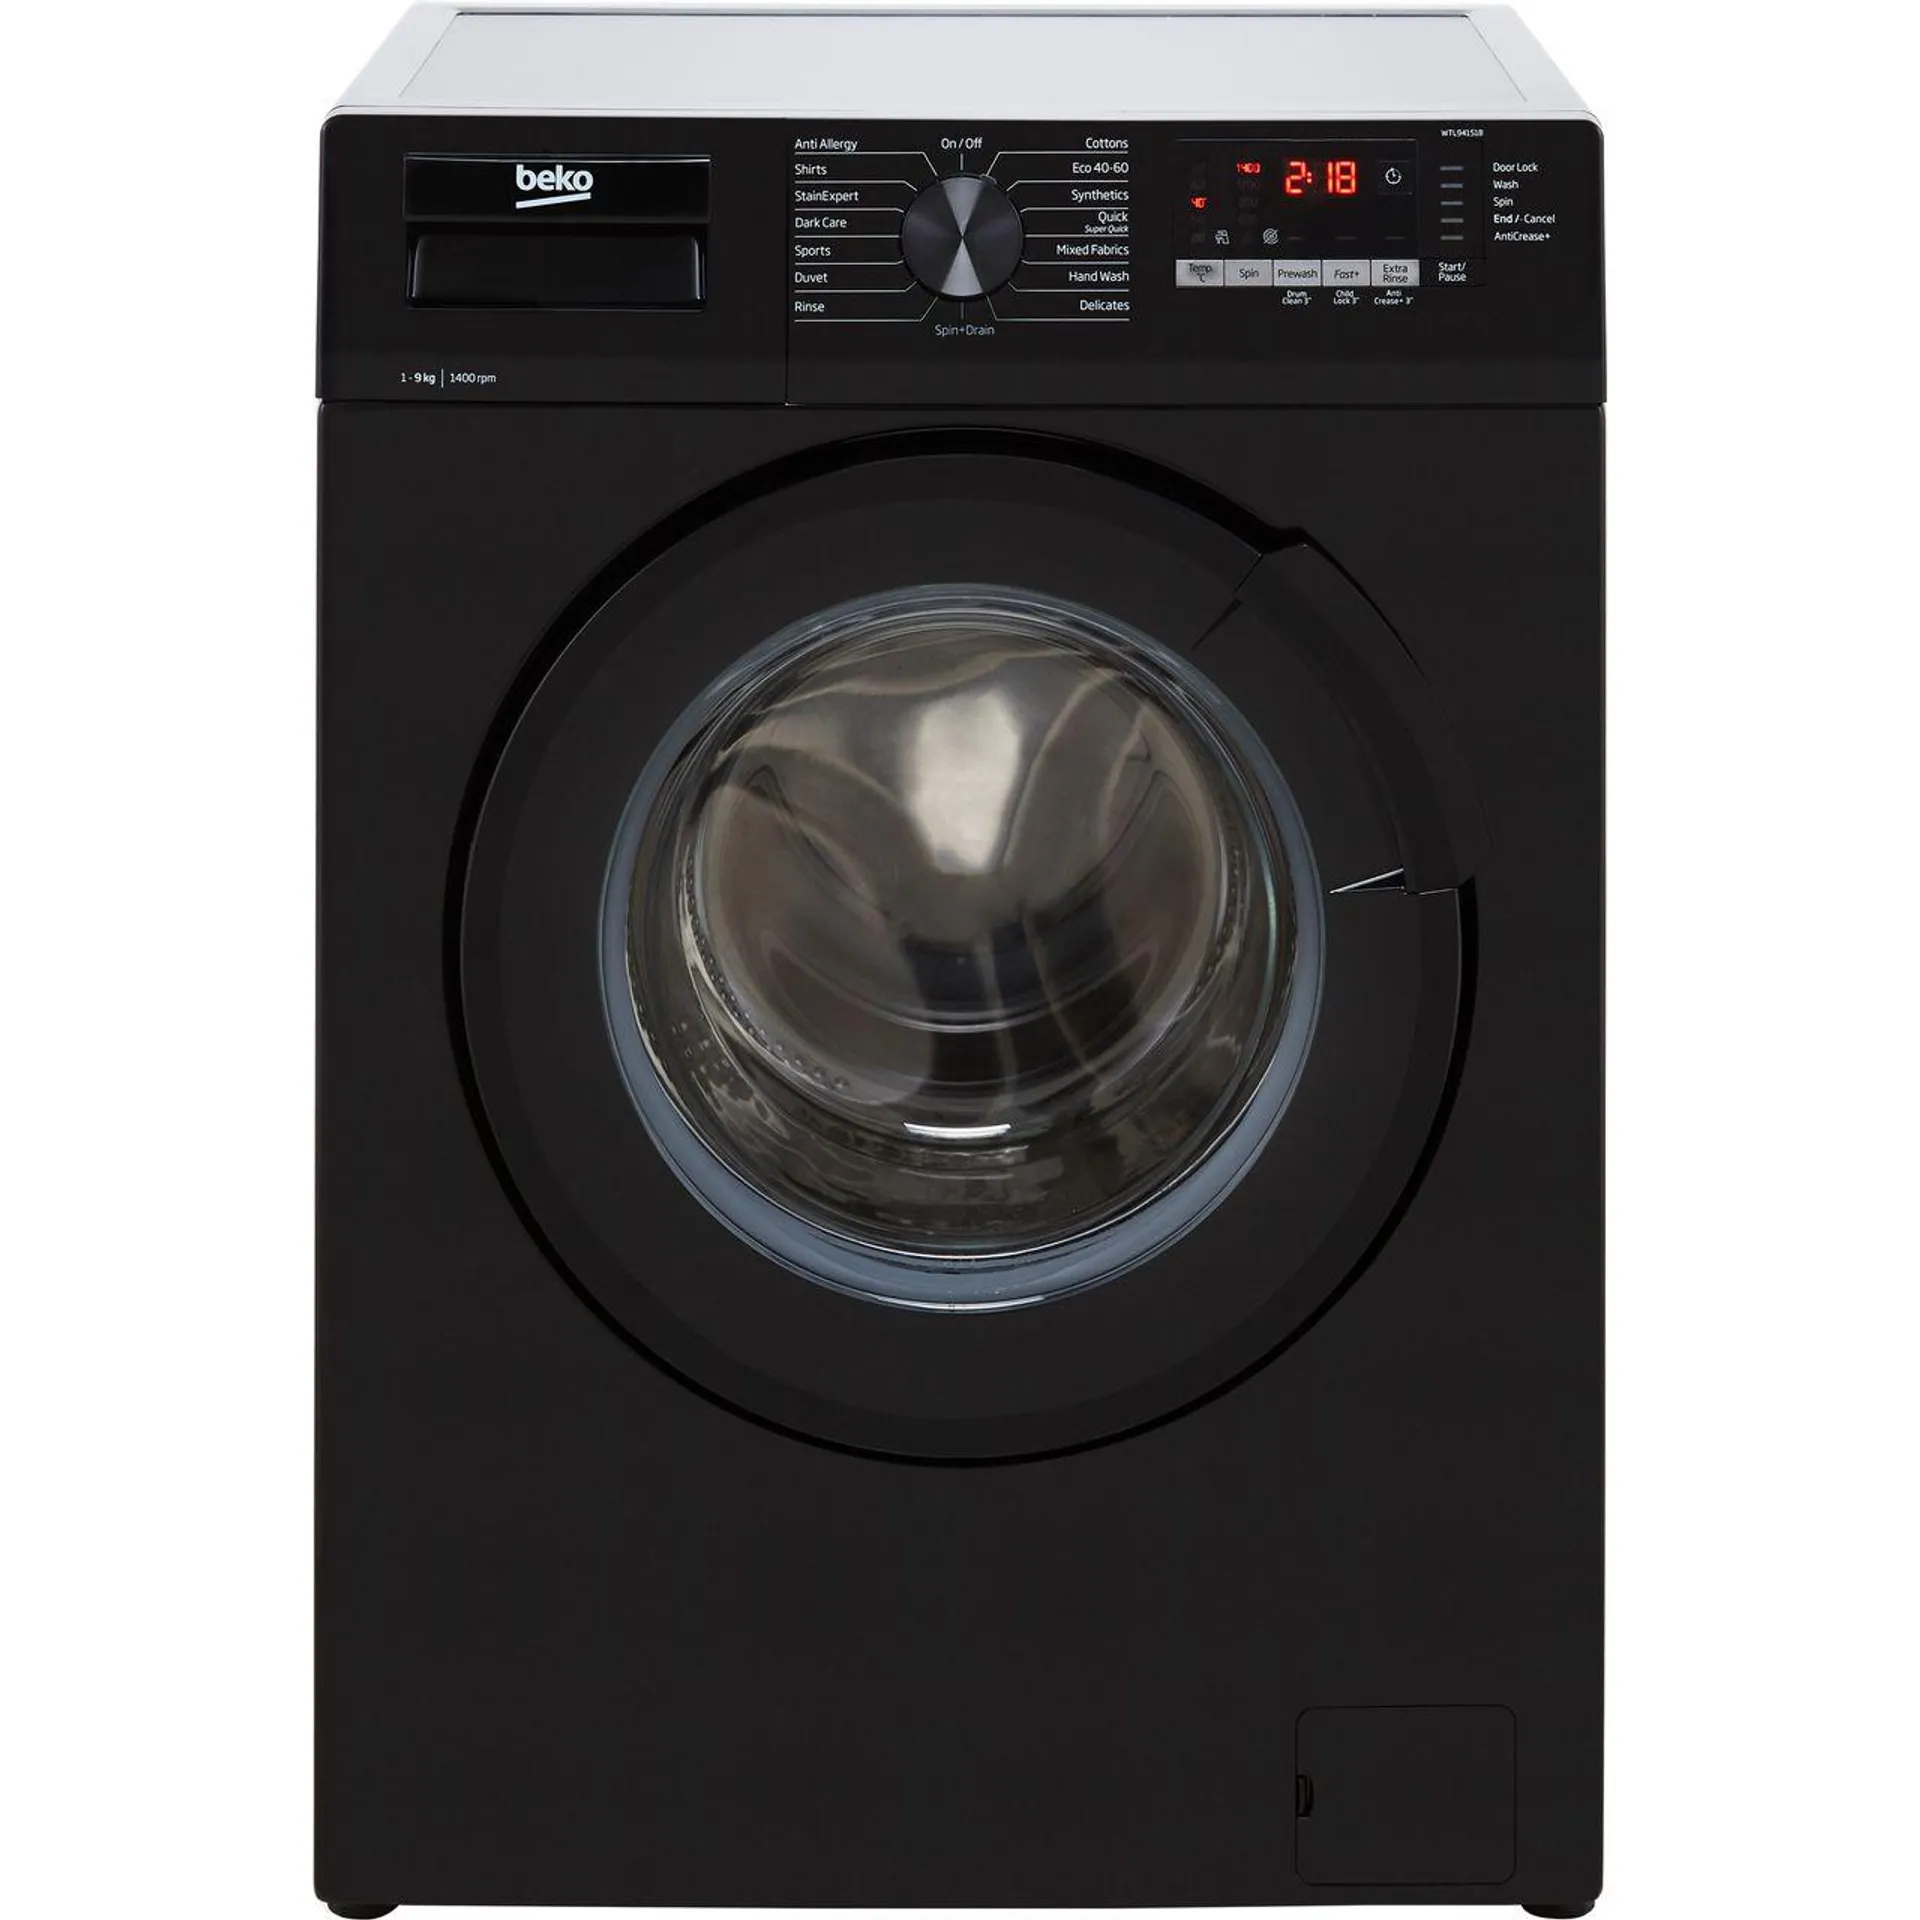 Beko WTL94151B 9kg Washing Machine with 1400 rpm - Black - B Rated